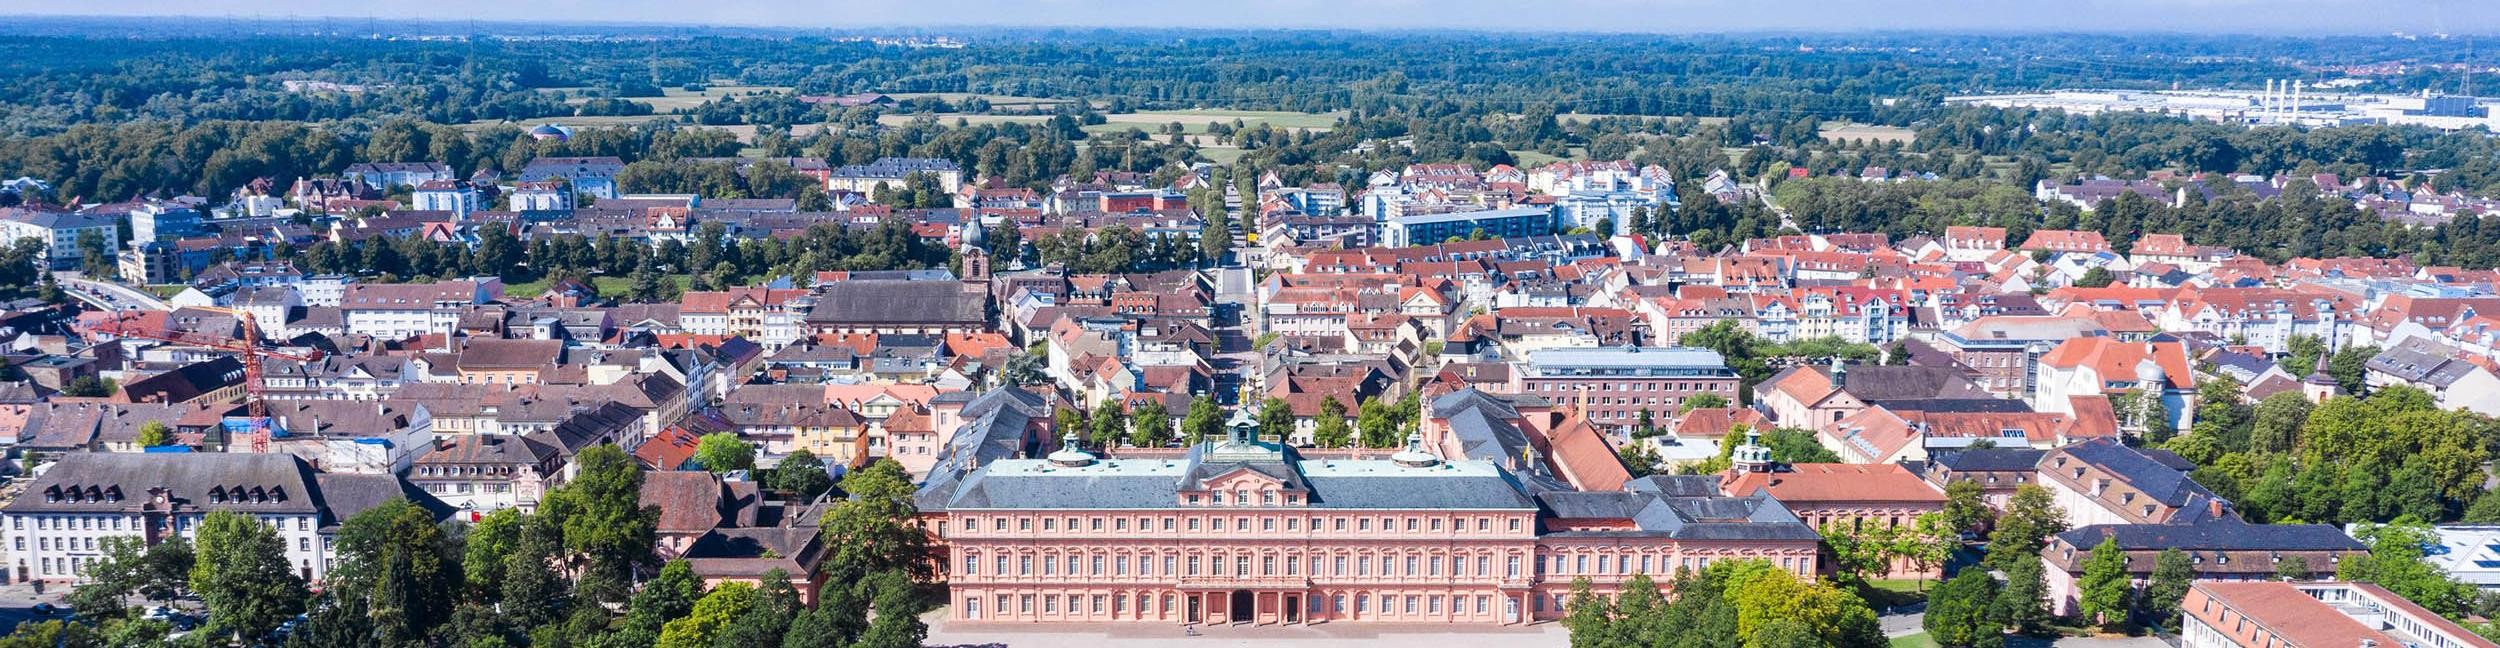 Luftaufnahme Schloss Rastatt und Innenstadt Rastatt